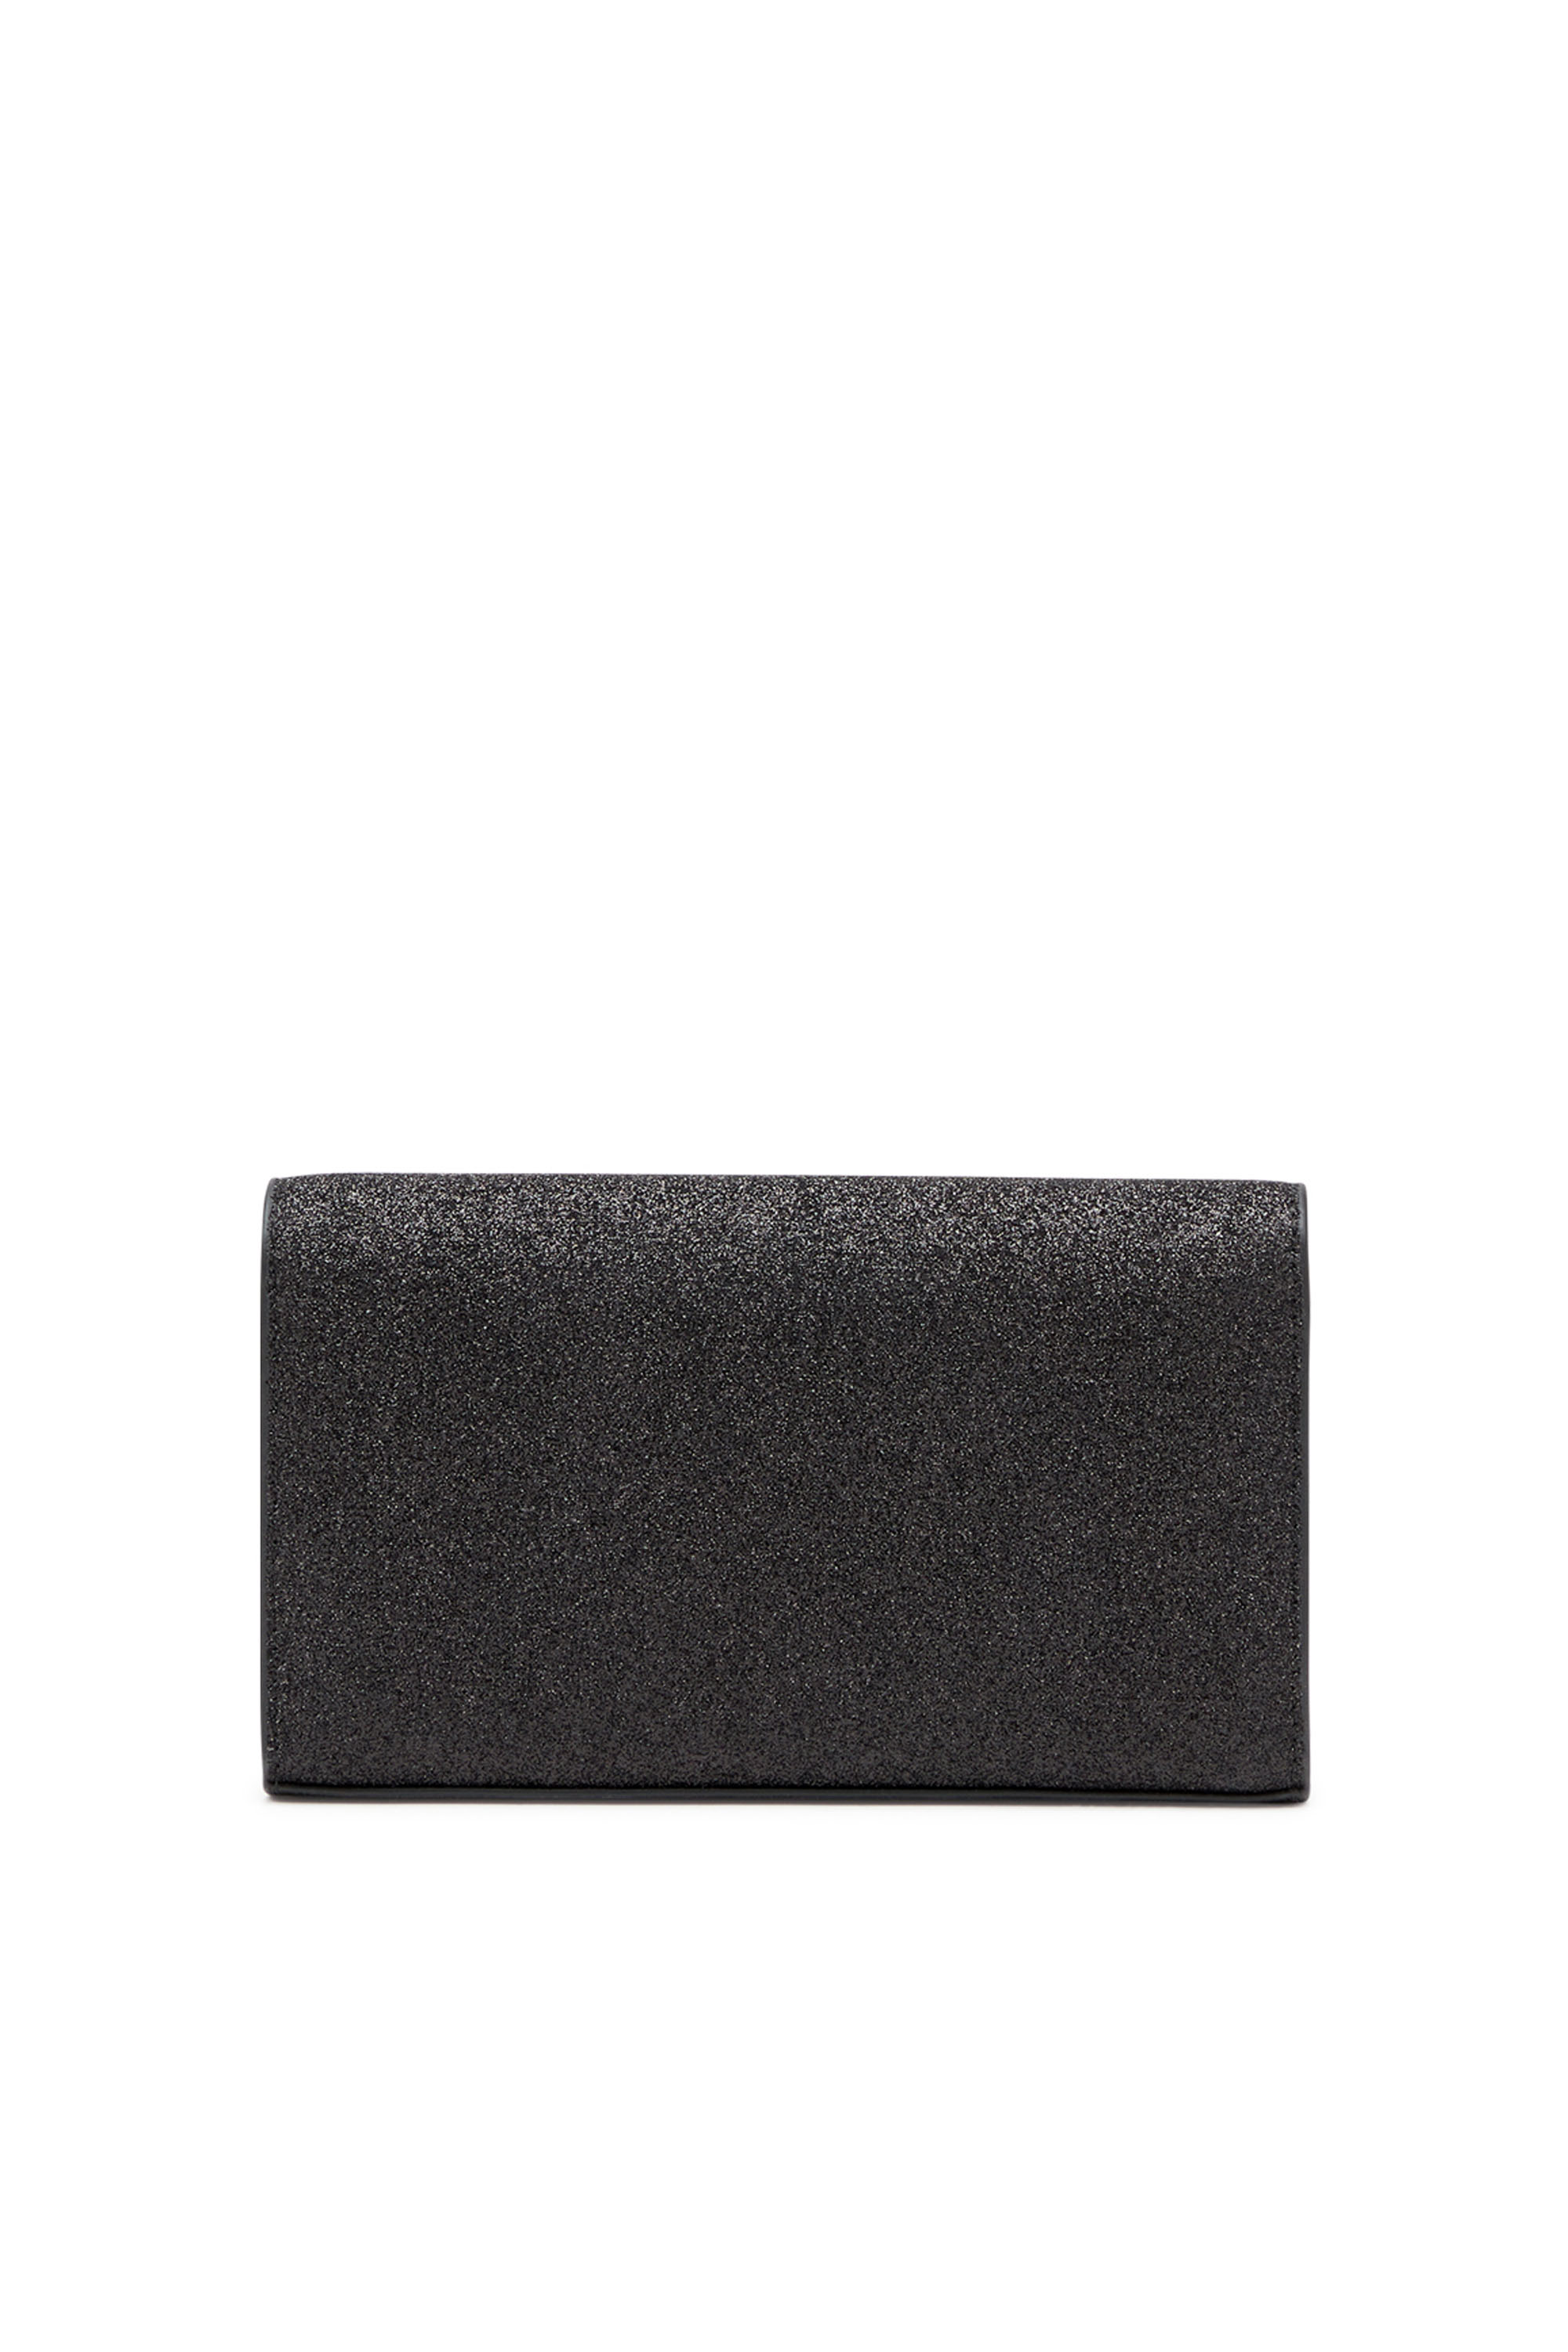 Diesel - 1DR WALLET STRAP, Woman Wallet bag in glitter fabric in Black - Image 2